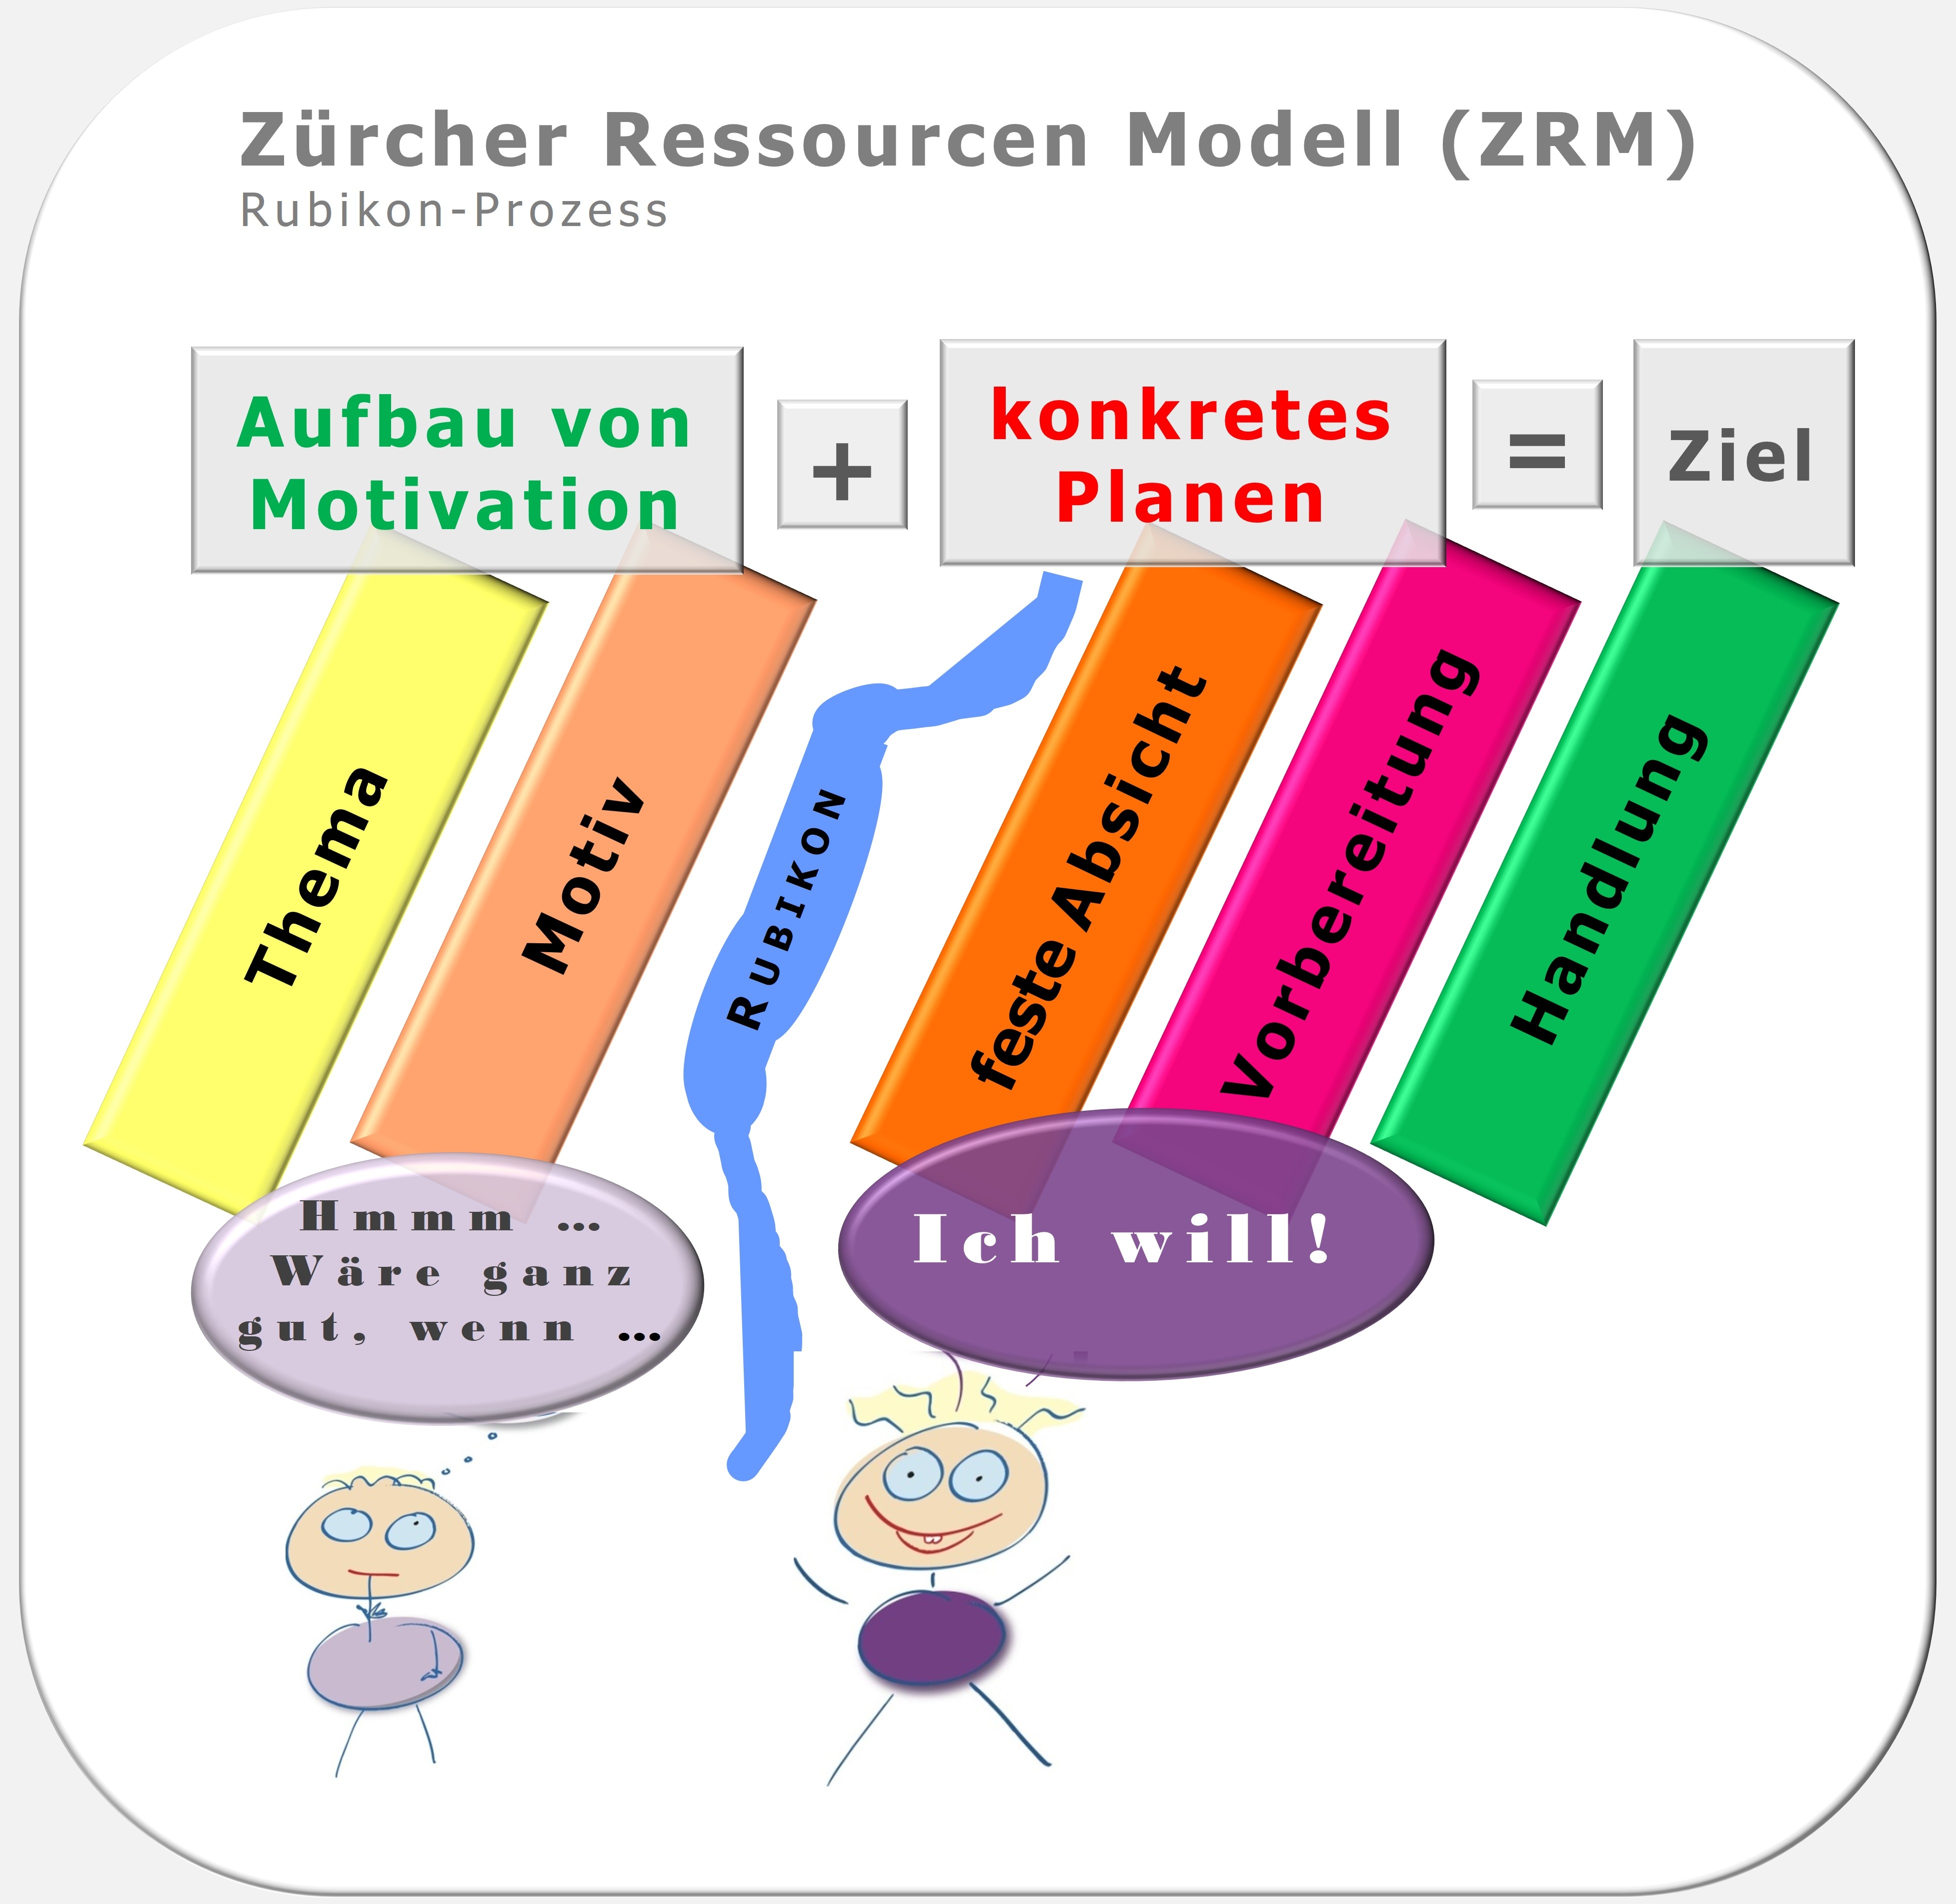 Rubikonmodell, Zürcher Ressourcen Modell, Hartmut Neusitzer, Frank Kraus, Maja Storch